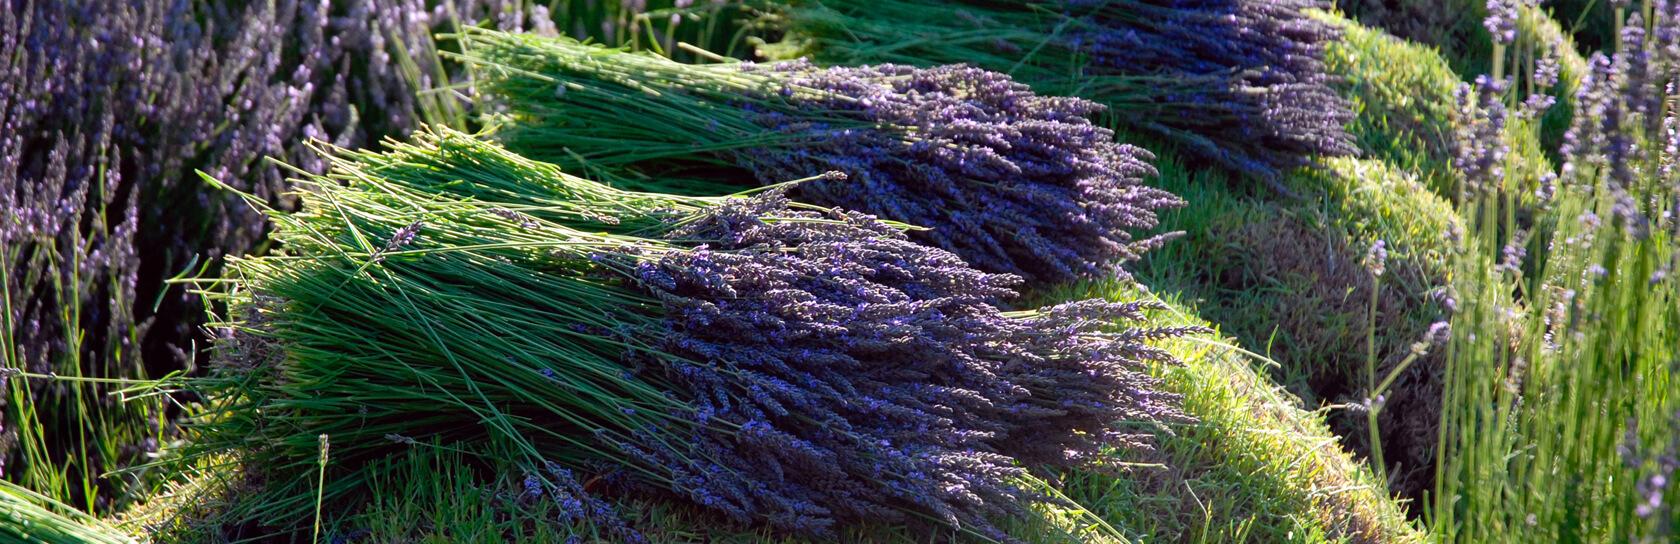 Lavender field image